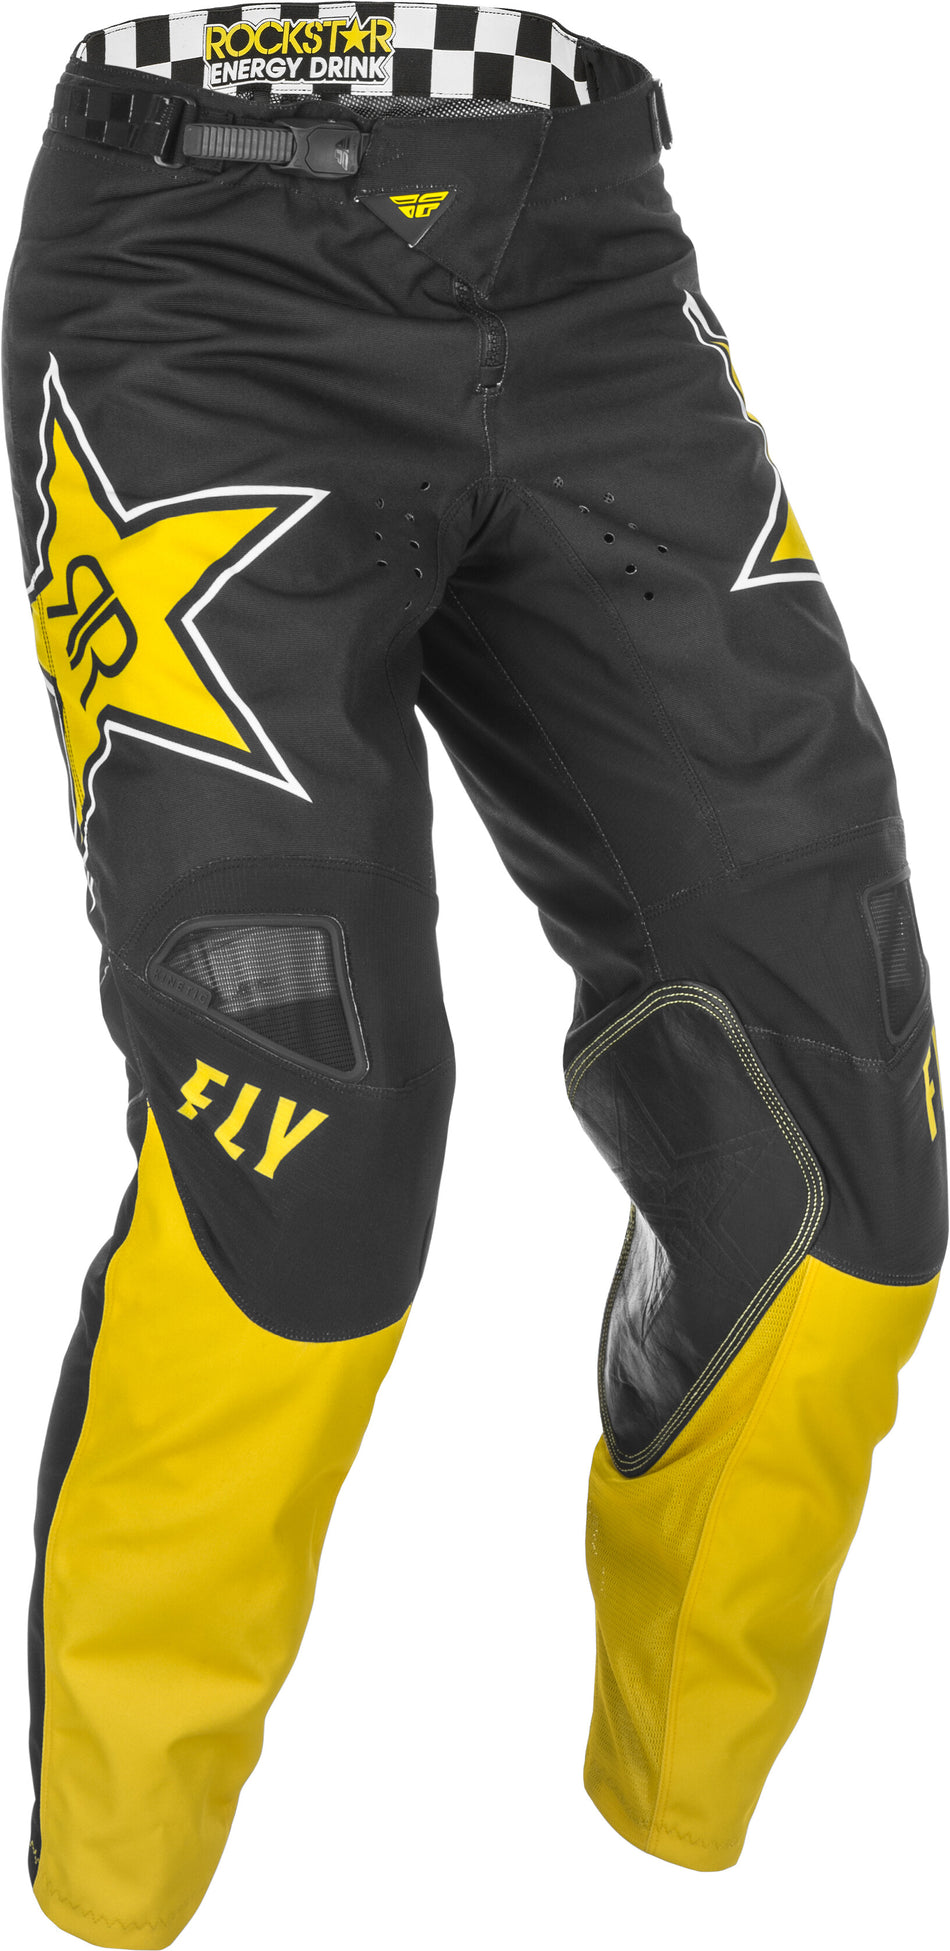 FLY RACING Kinetic Rockstar Pants Yellow/Black Sz 30 374-02330